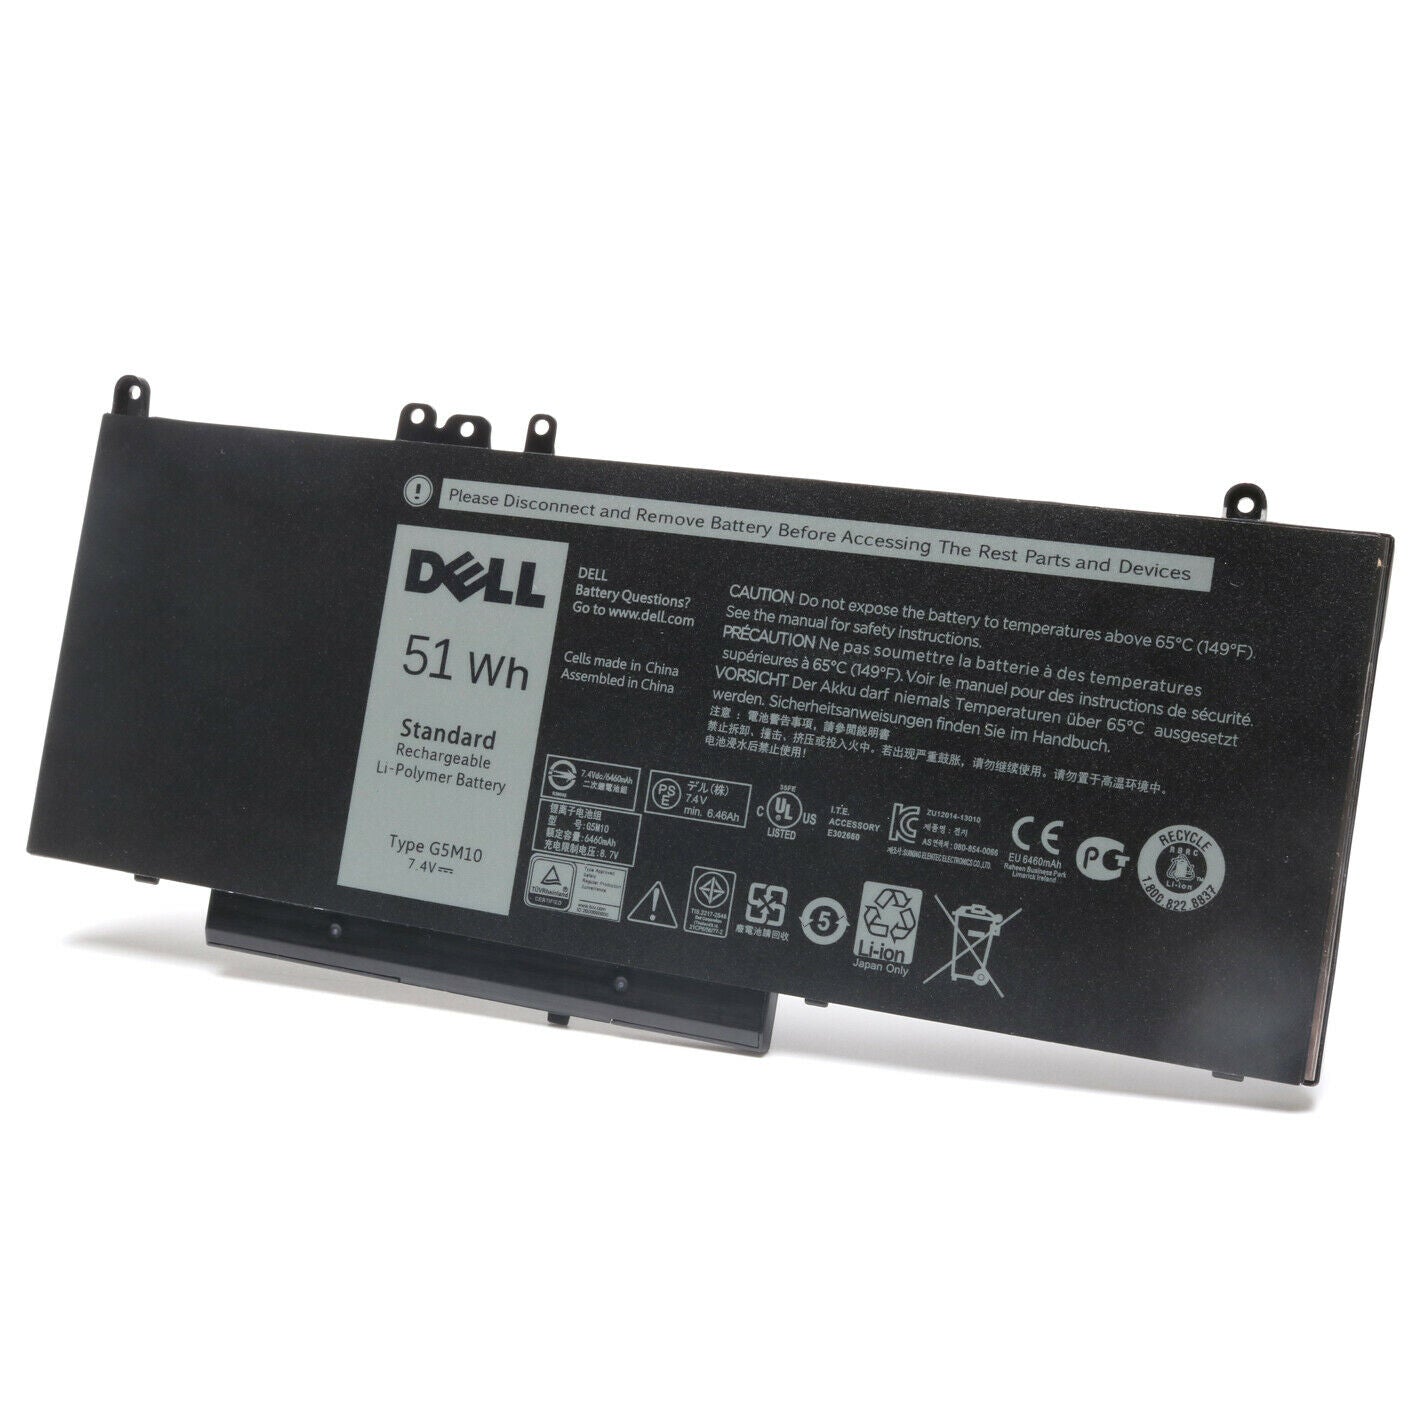 Genuine Dell Latitude G5M10 51WH E5450 E5470 E5550 E5570 (G5M10, 0WYJC2, 8V5GX) Laptop Battery - eBuy UAE